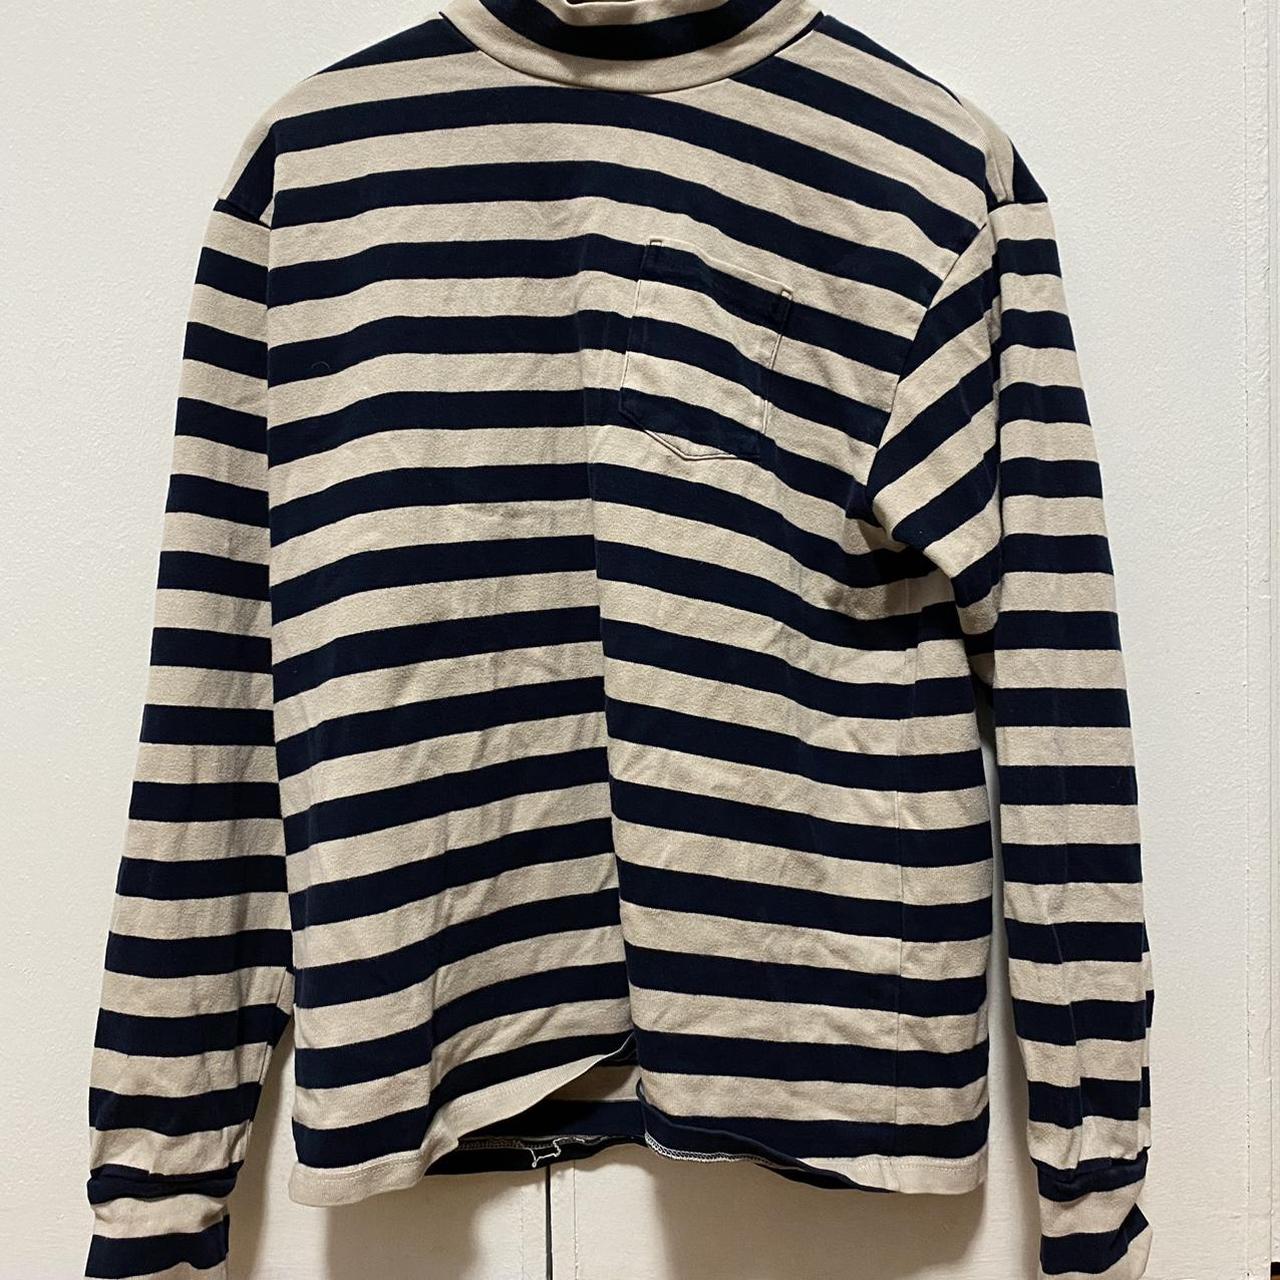 Brandy Melville Striped Sweater - Depop